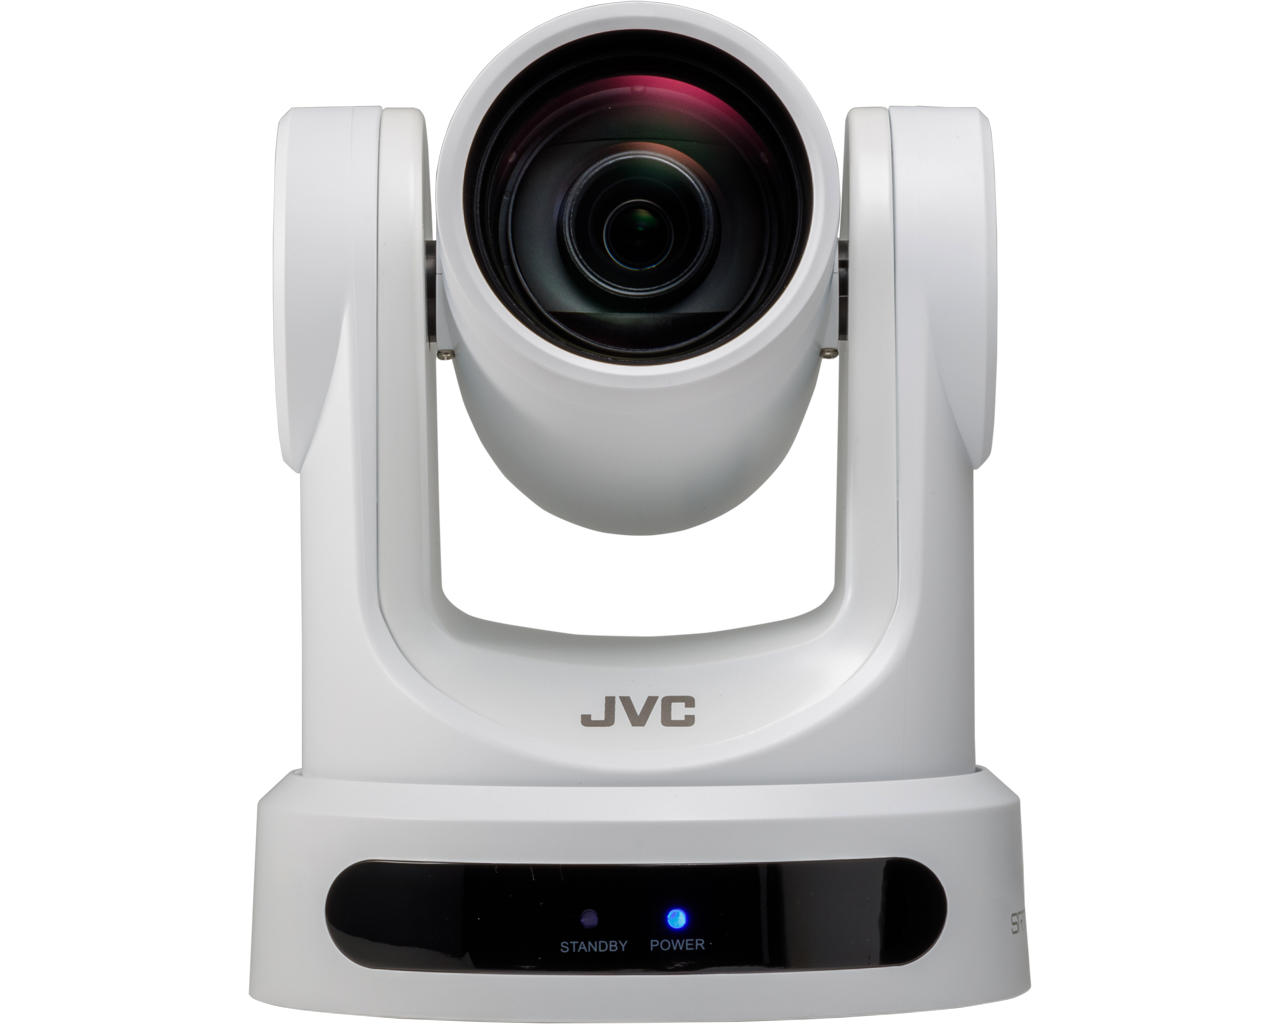 JVC KY-PZ200WE HD PTZ camera, white, 20x zoom, dual streaming